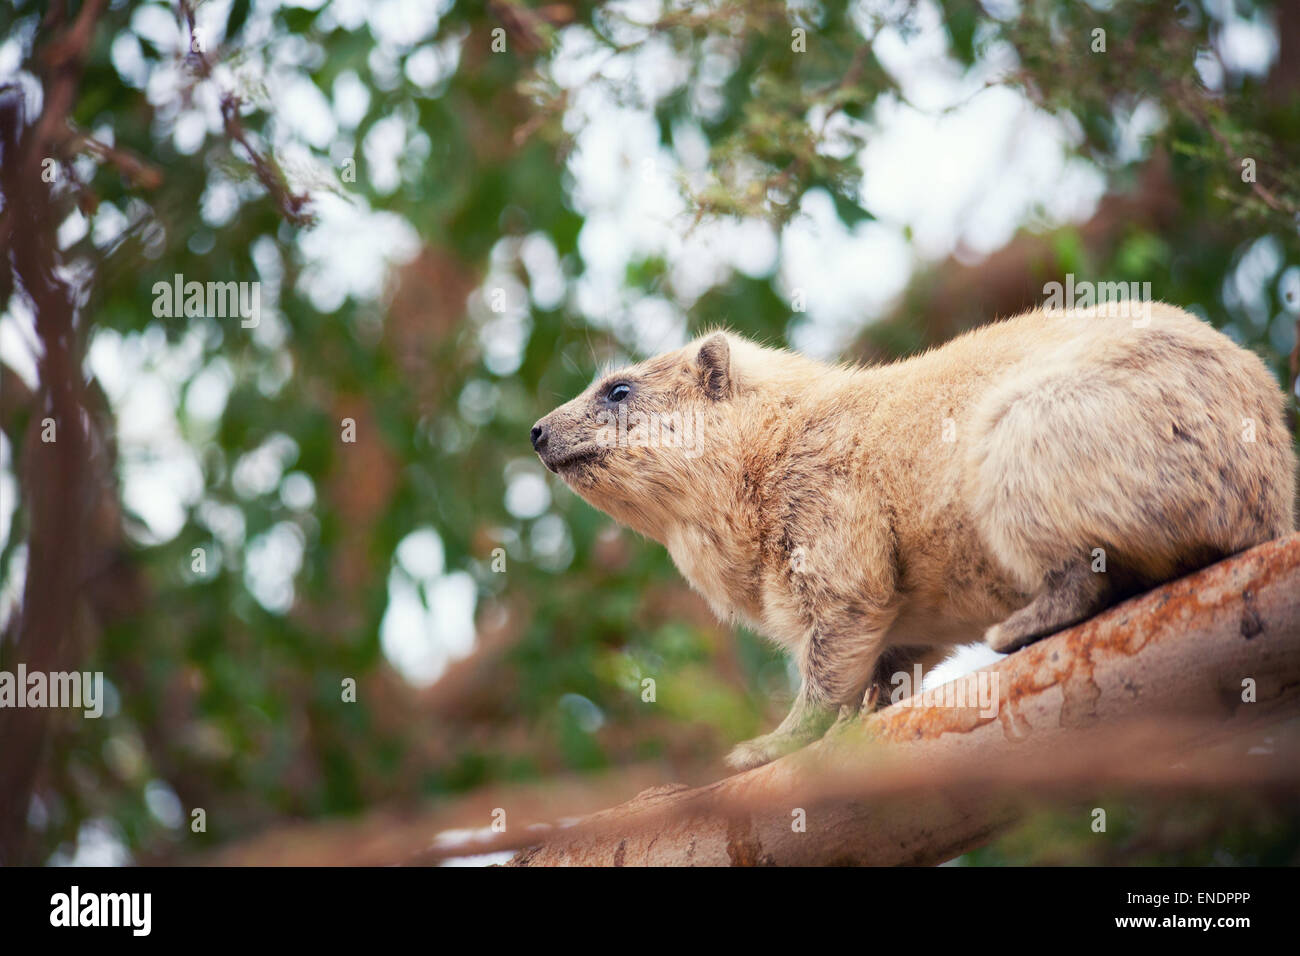 Rock hyrax on the tree Stock Photo